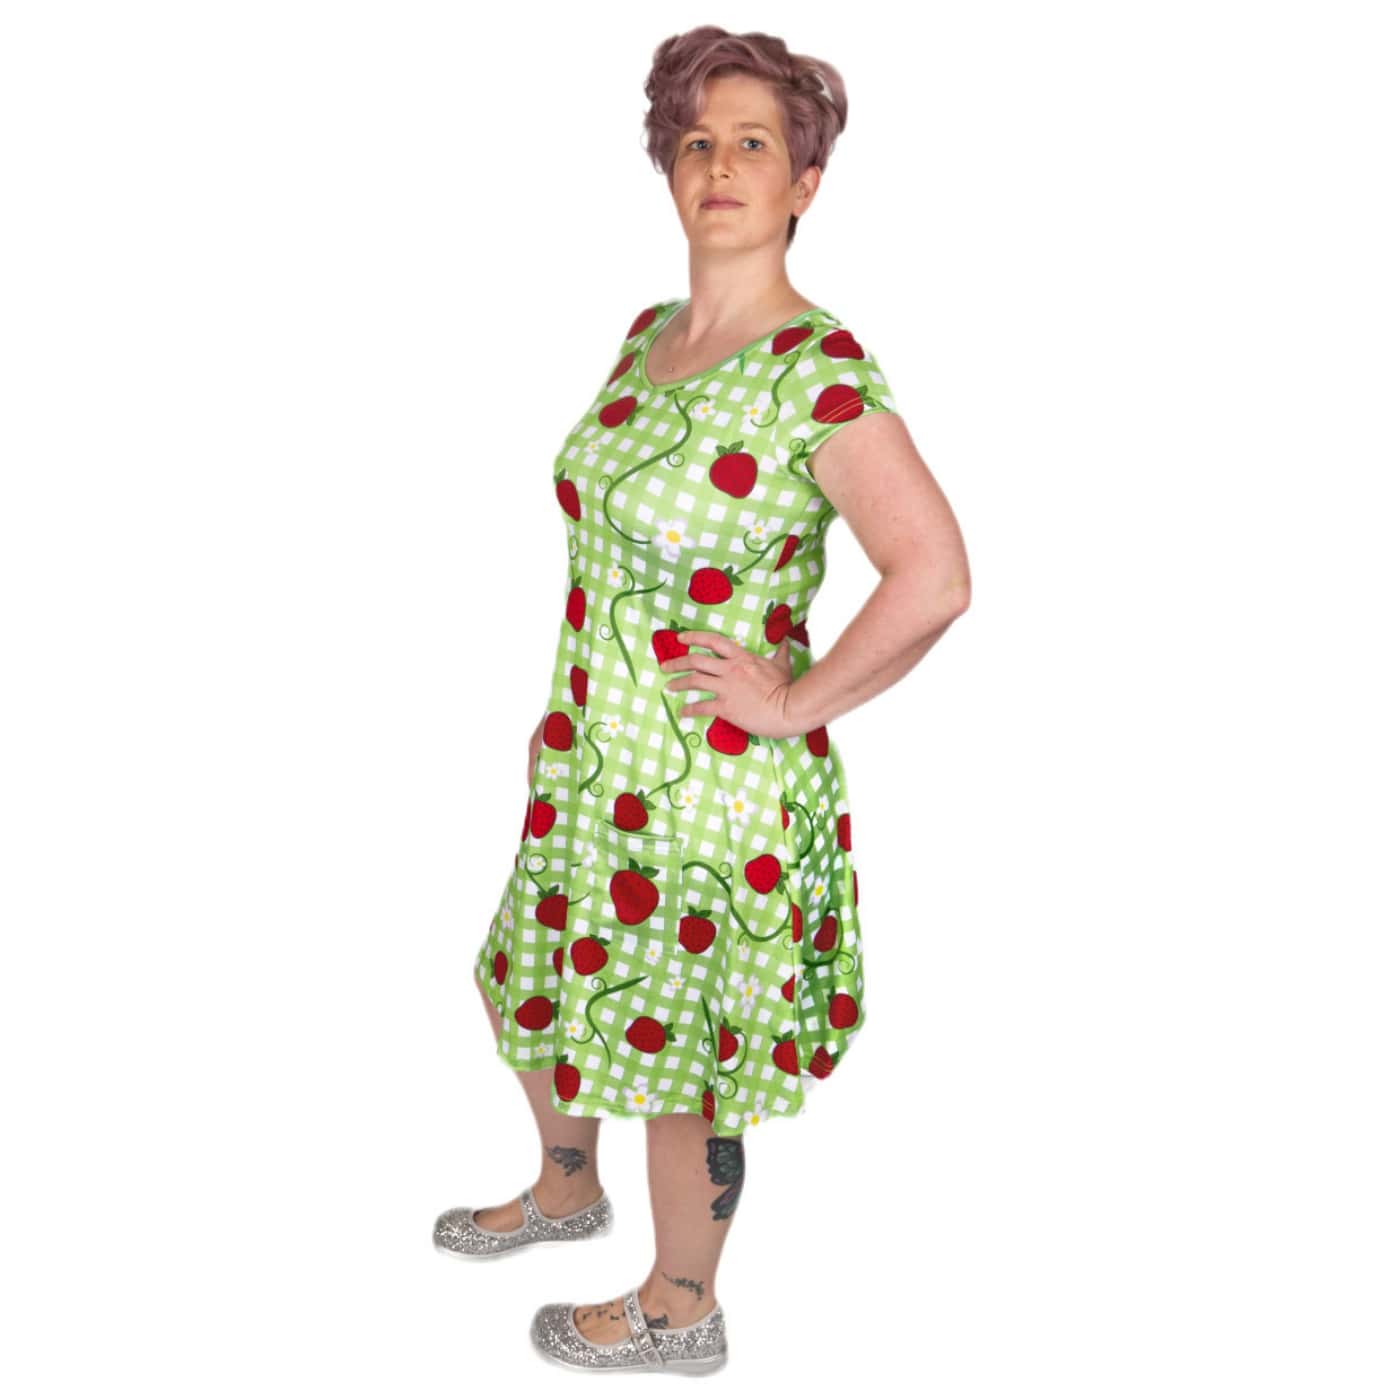 Berry Picnic Tunic Dress by RainbowsAndFairies.com.au (Strawberry Shortcake - Green Gingham - Vintage Inspired - Kitsch - Dress With Pockets - Mod) - SKU: CL_TUNDR_BPCNC_ORG - Pic-02